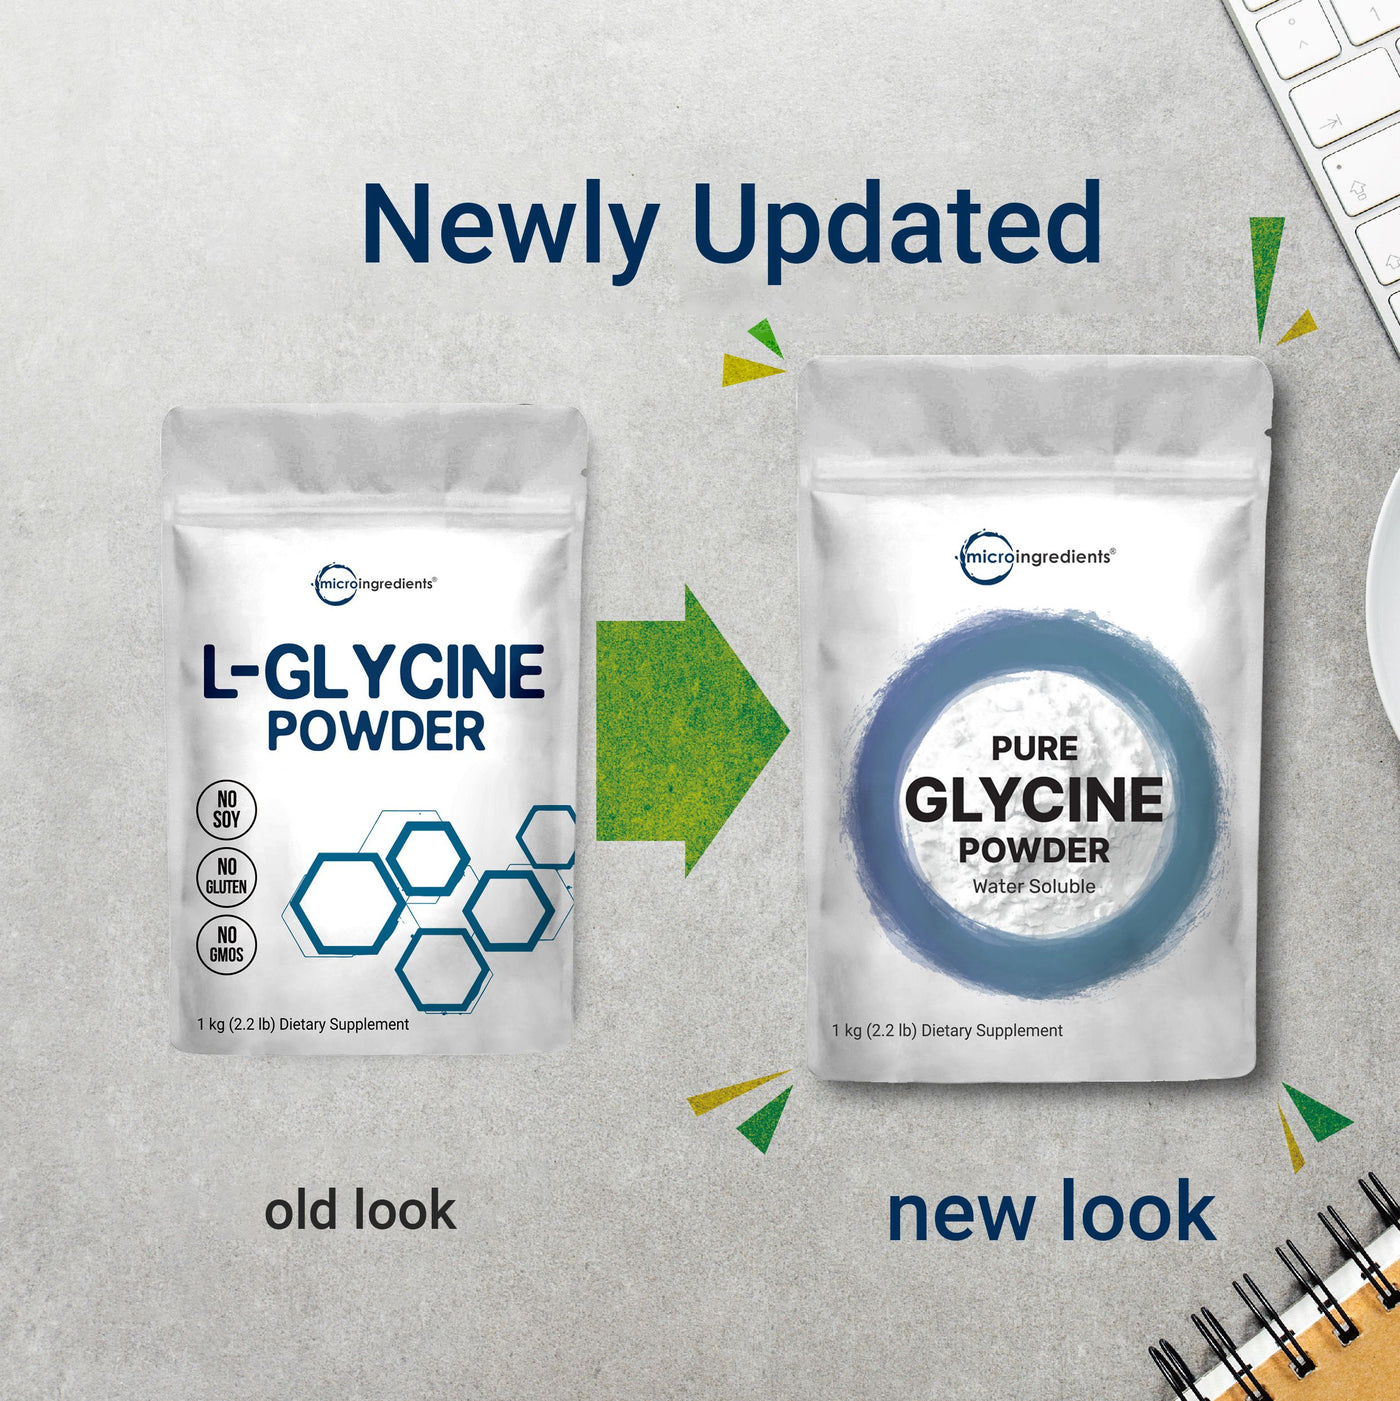 L-Glycine Powder Newly Updated